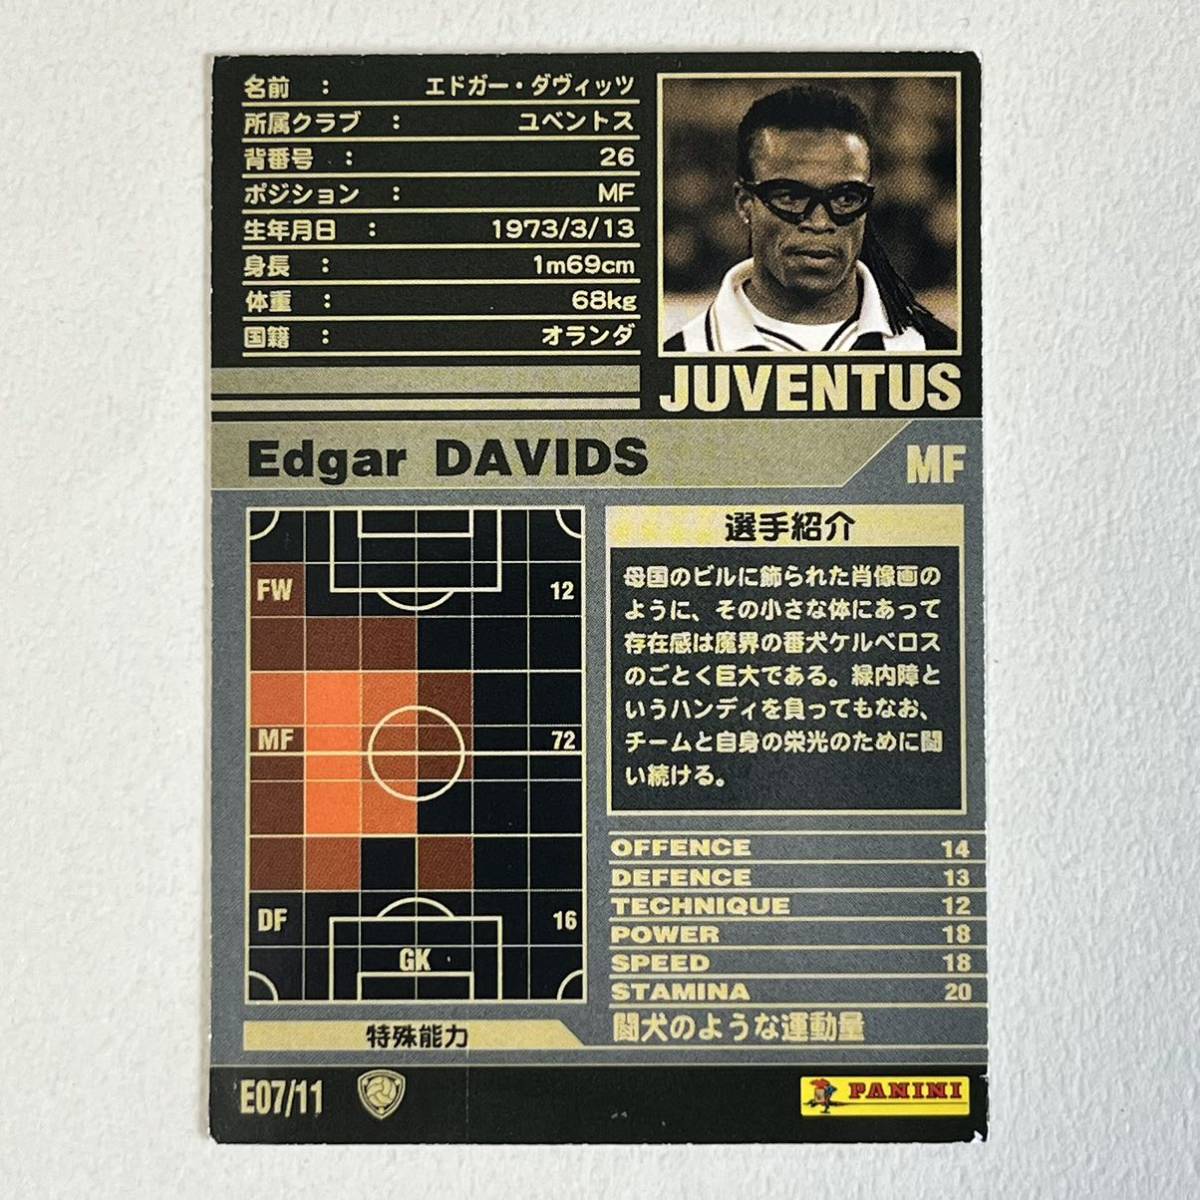 ♪♪WCCF 01-02 BE エドガー・ダヴィッツ Edgar Davids Juventus 2001-2002♪三点落札で普通郵便送料無料♪_画像2